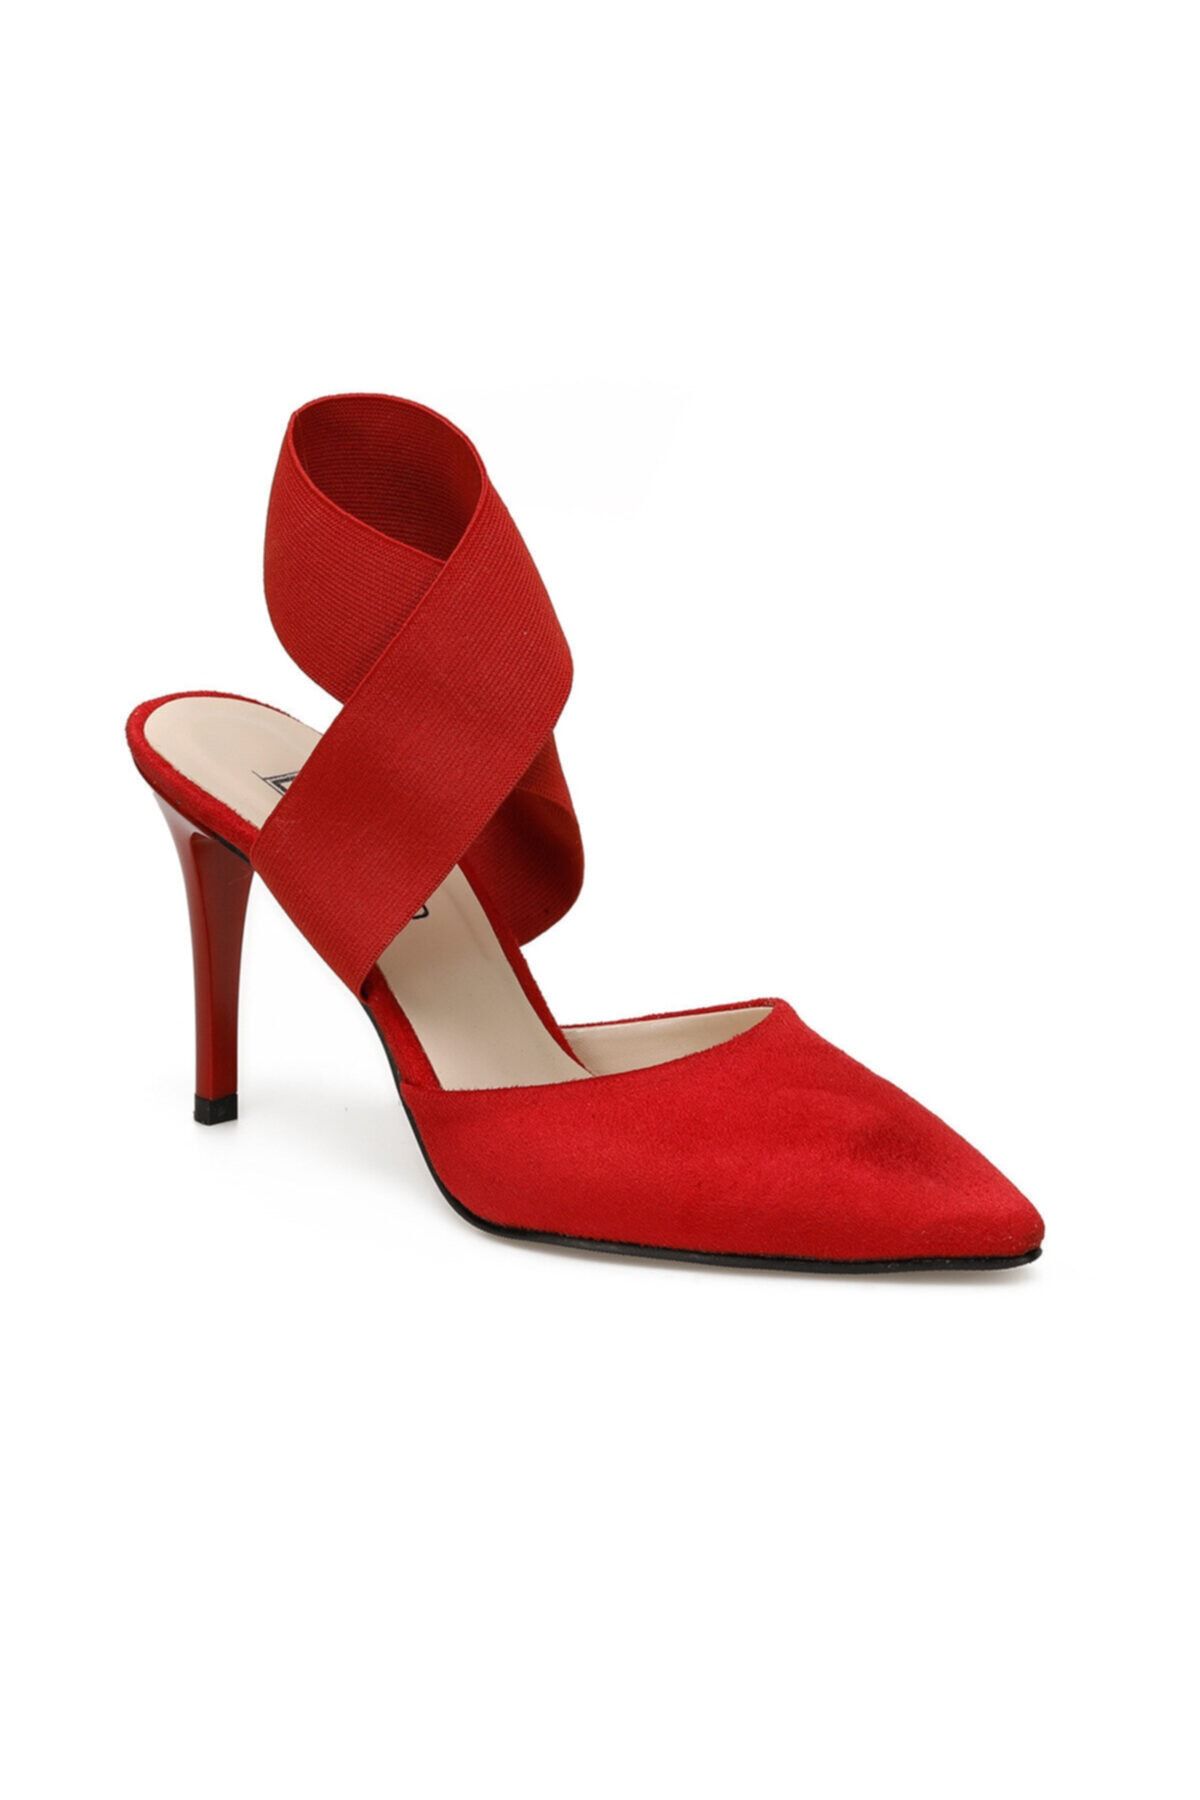 Butigo RİVERA Kırmızı Kadın Topuklu Ayakkabı 100539221